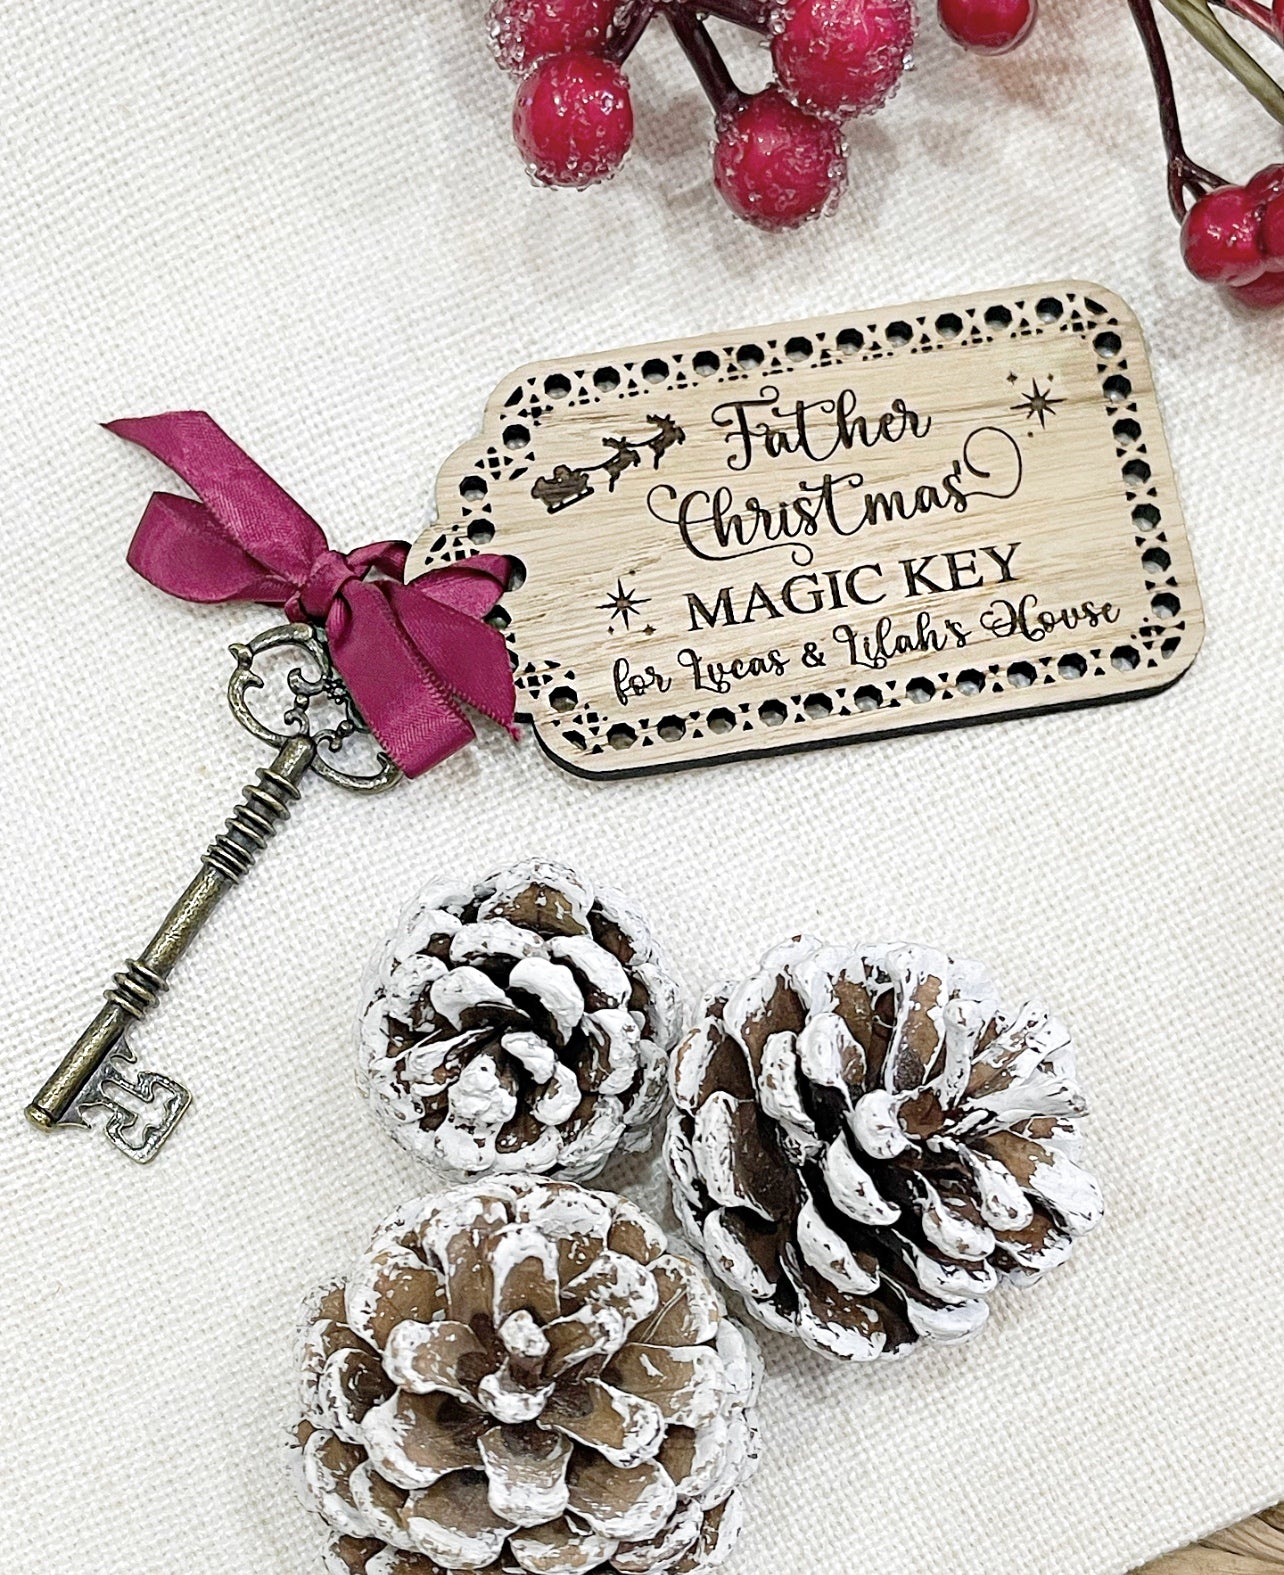 Santa’s Magic Key